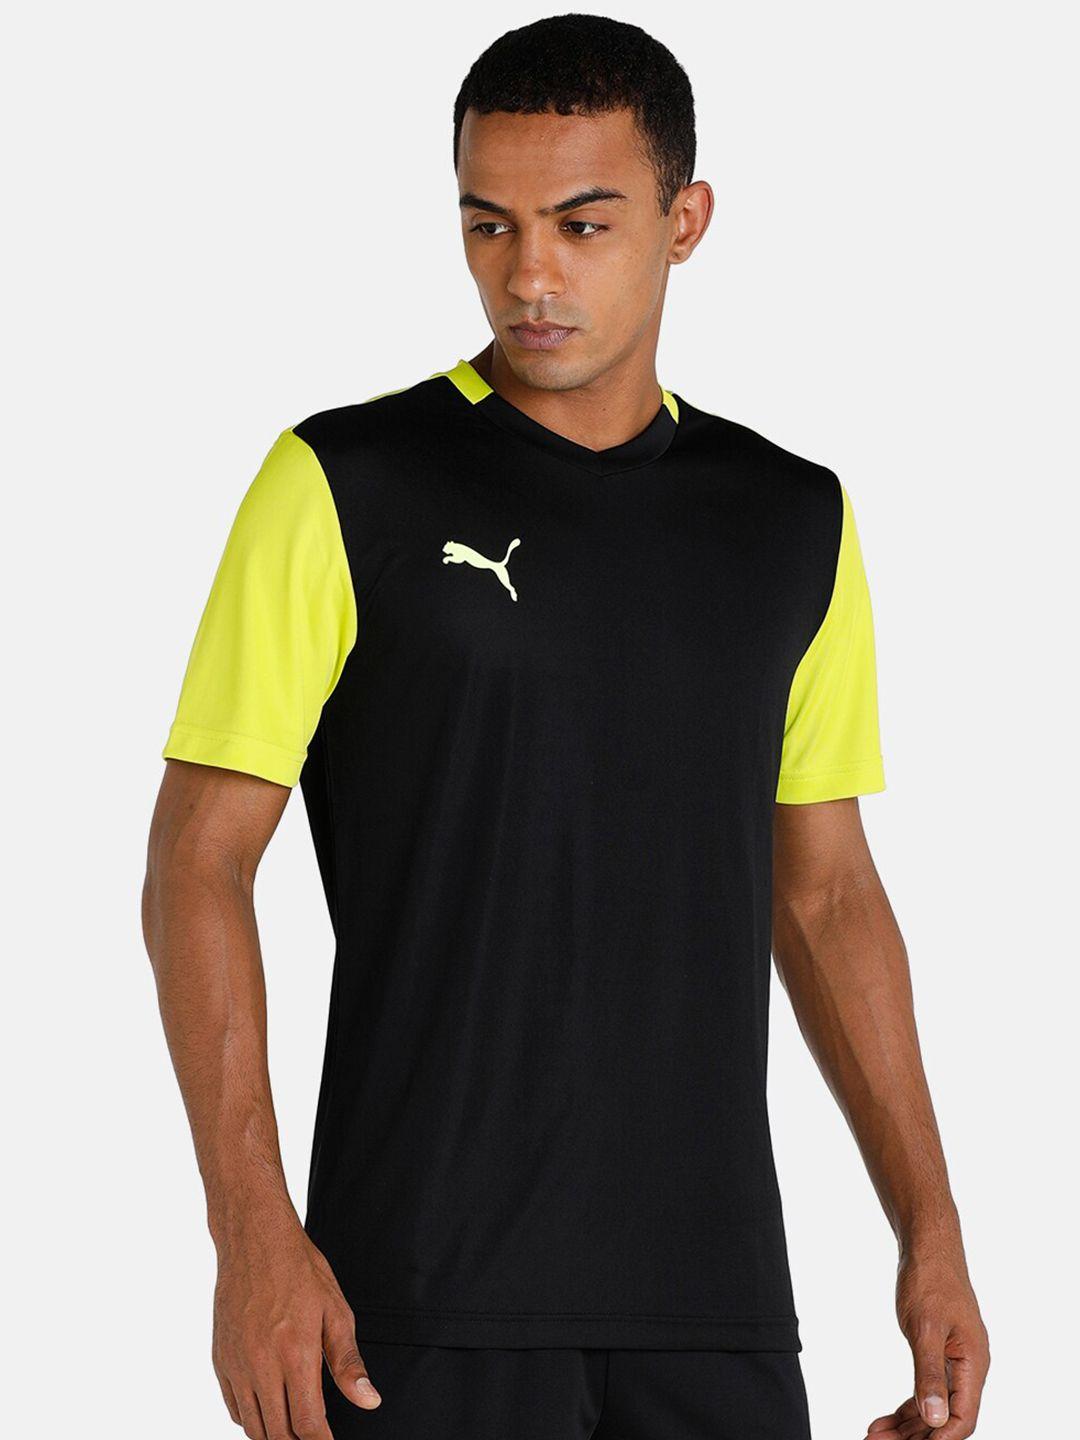 Puma Men Black & Yellow Colourblocked V-Neck dryCELL Outdoor T-shirt